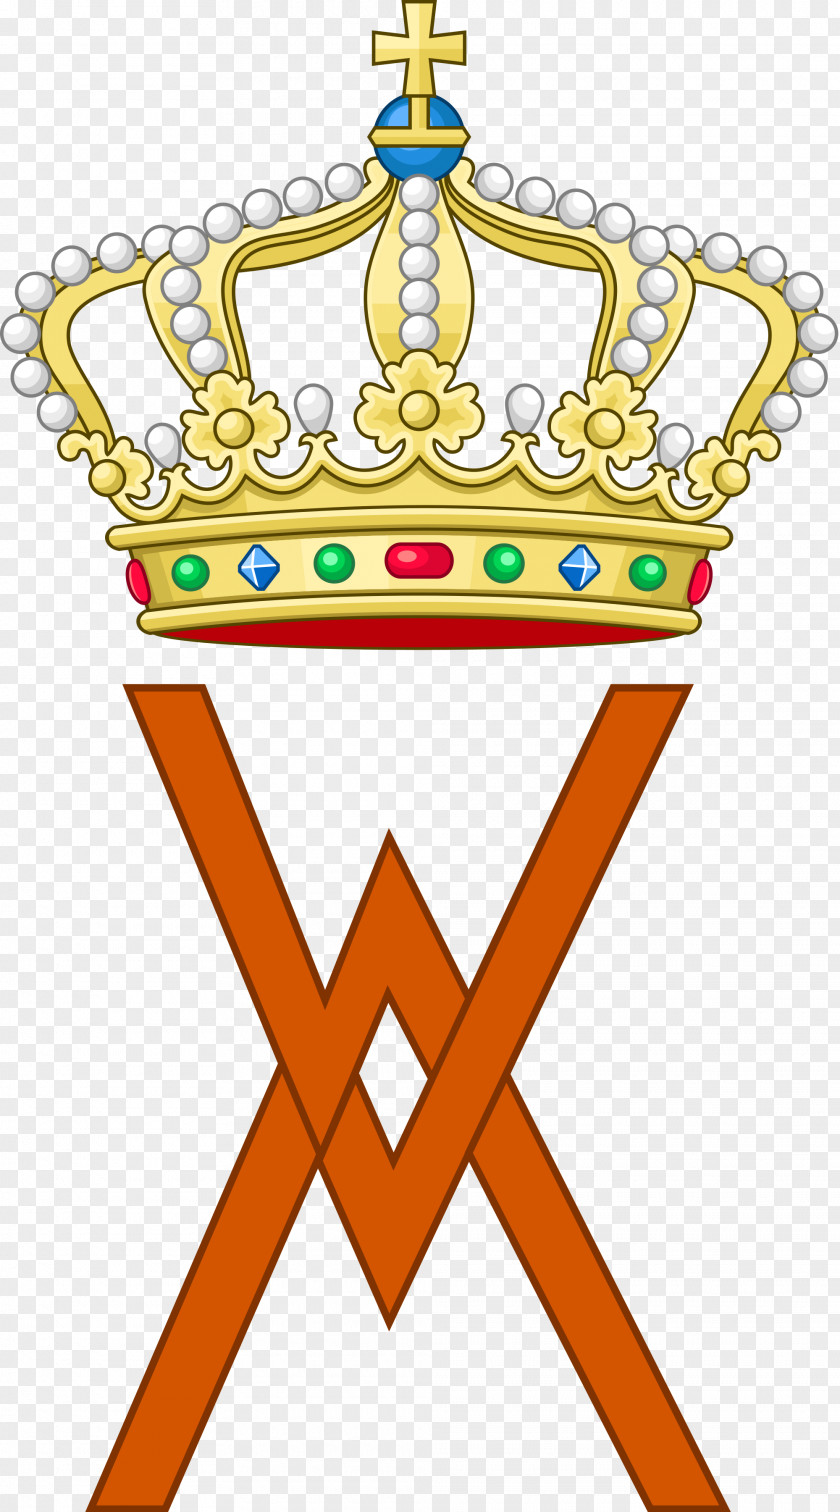 Prince Royal Cypher Crown Coroa Real Family Heraldry PNG